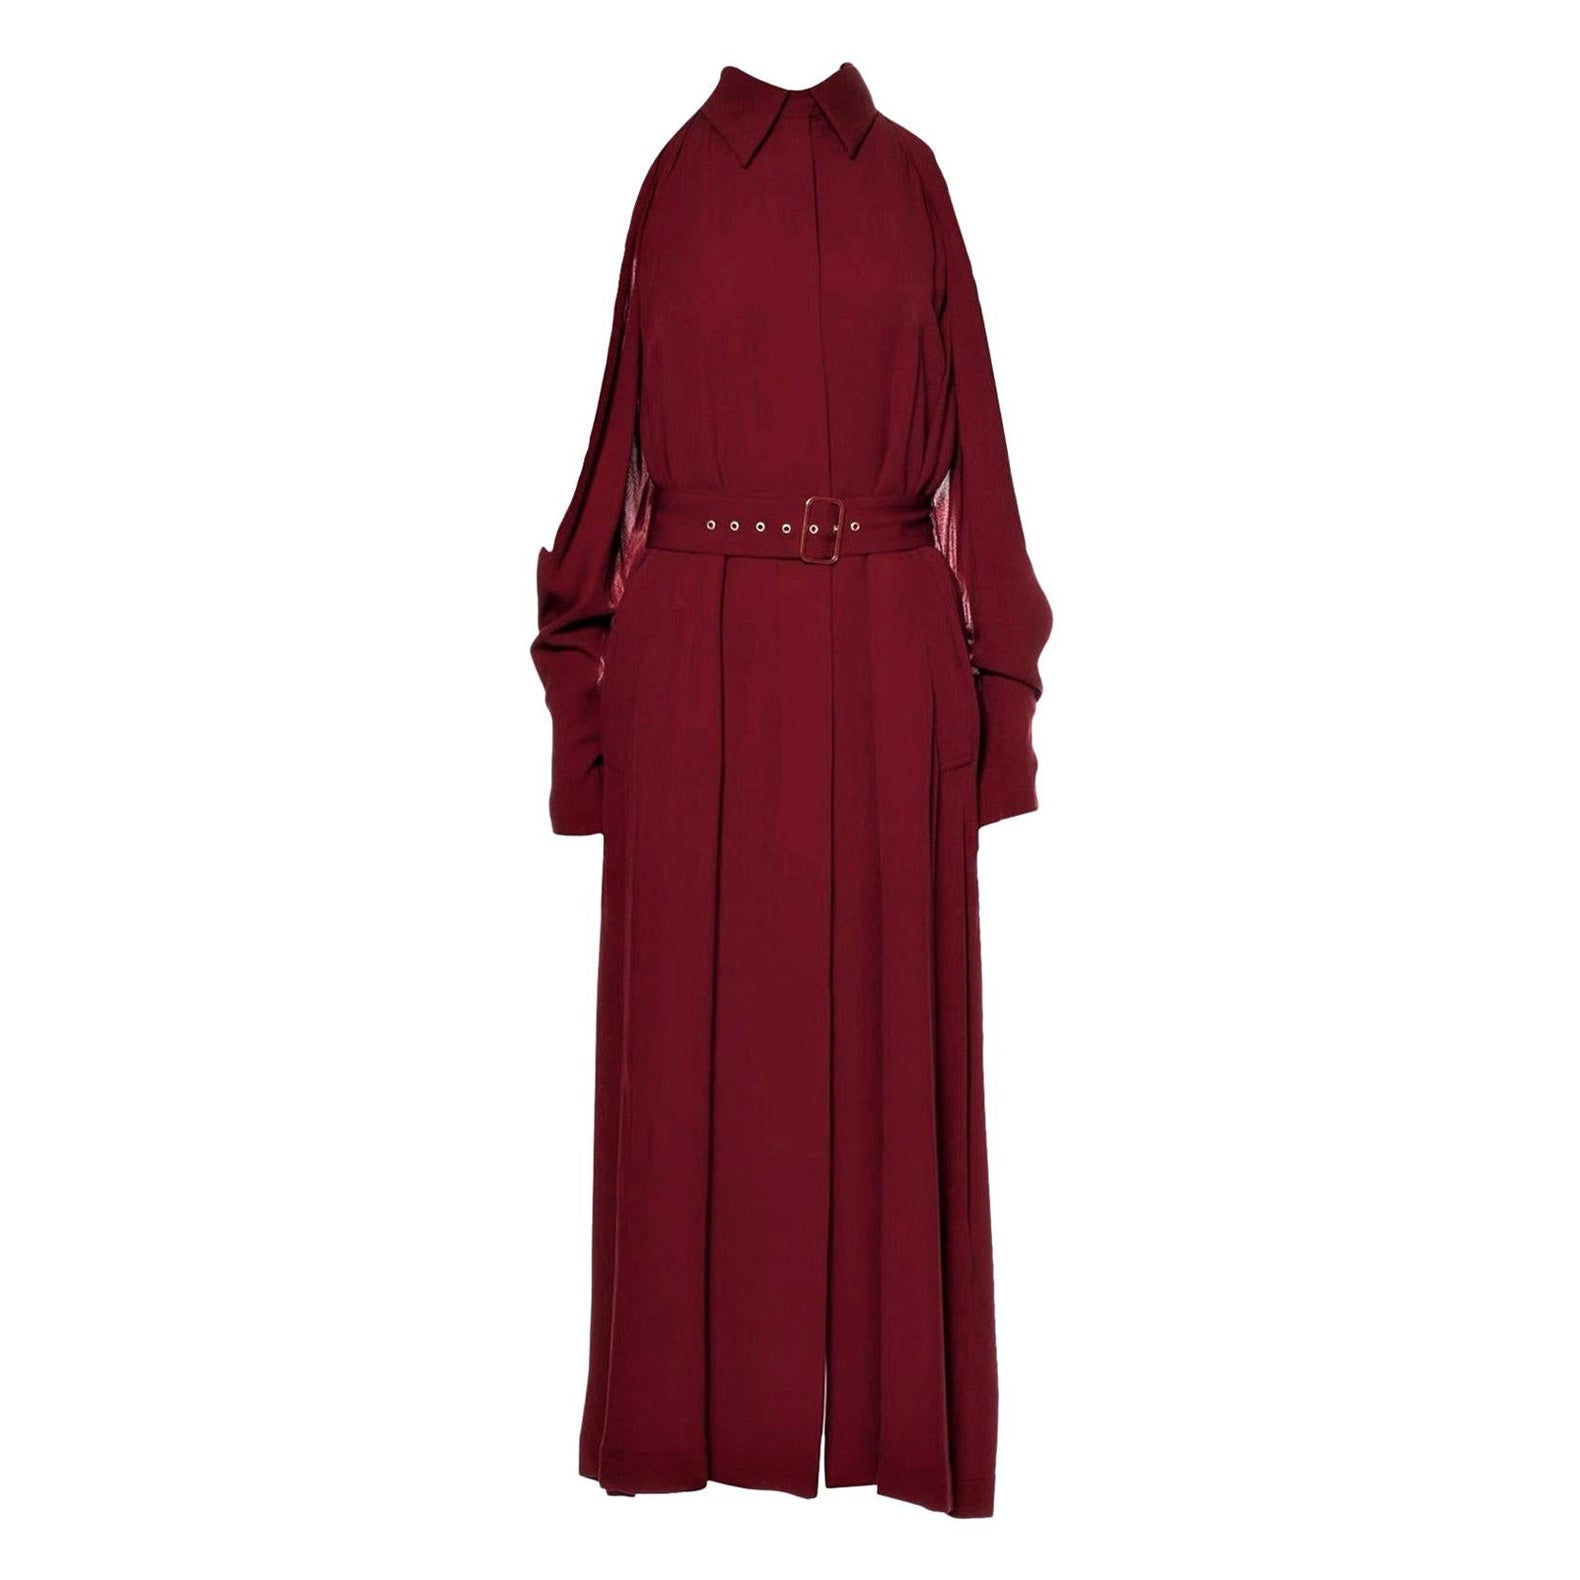 New Rare Salvatore Ferragamo Red Silk Dress F/W 2018  With Tags $3200 Sz 38